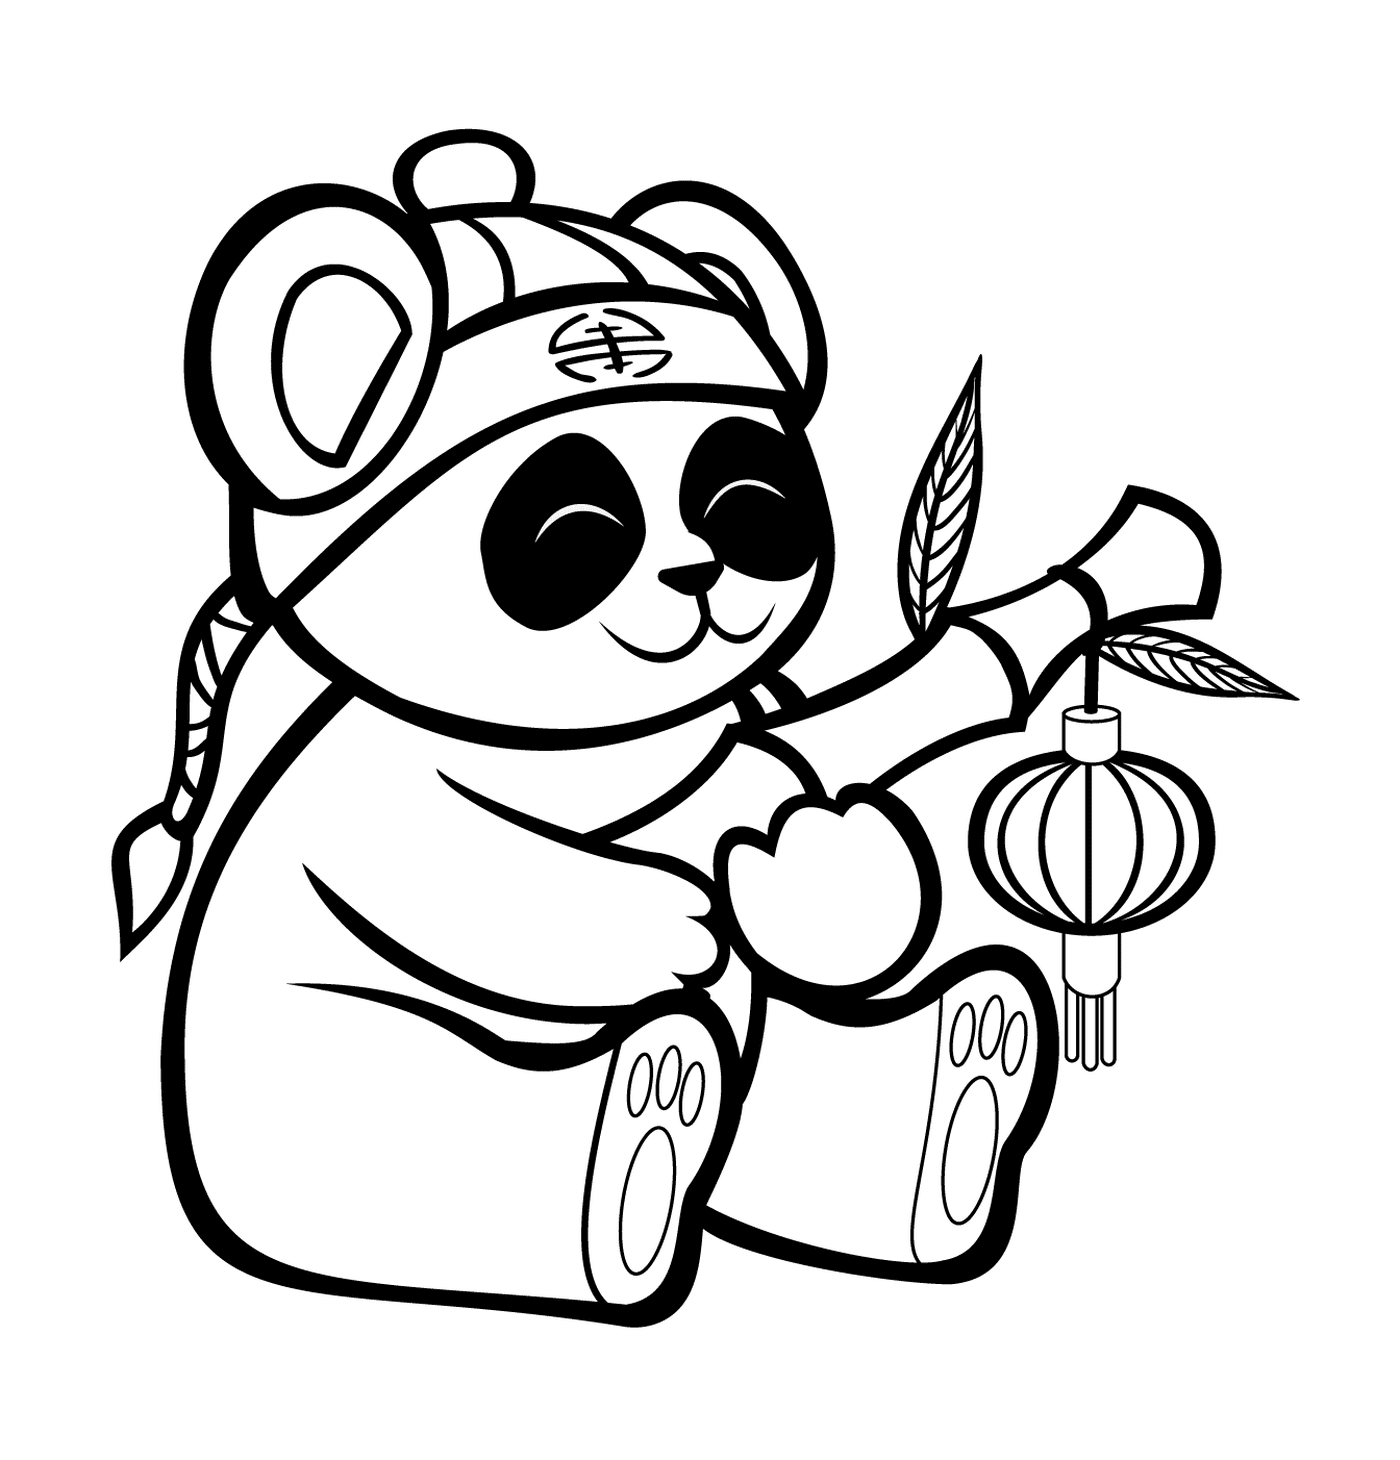  Carino panda con lanterna di bambù 